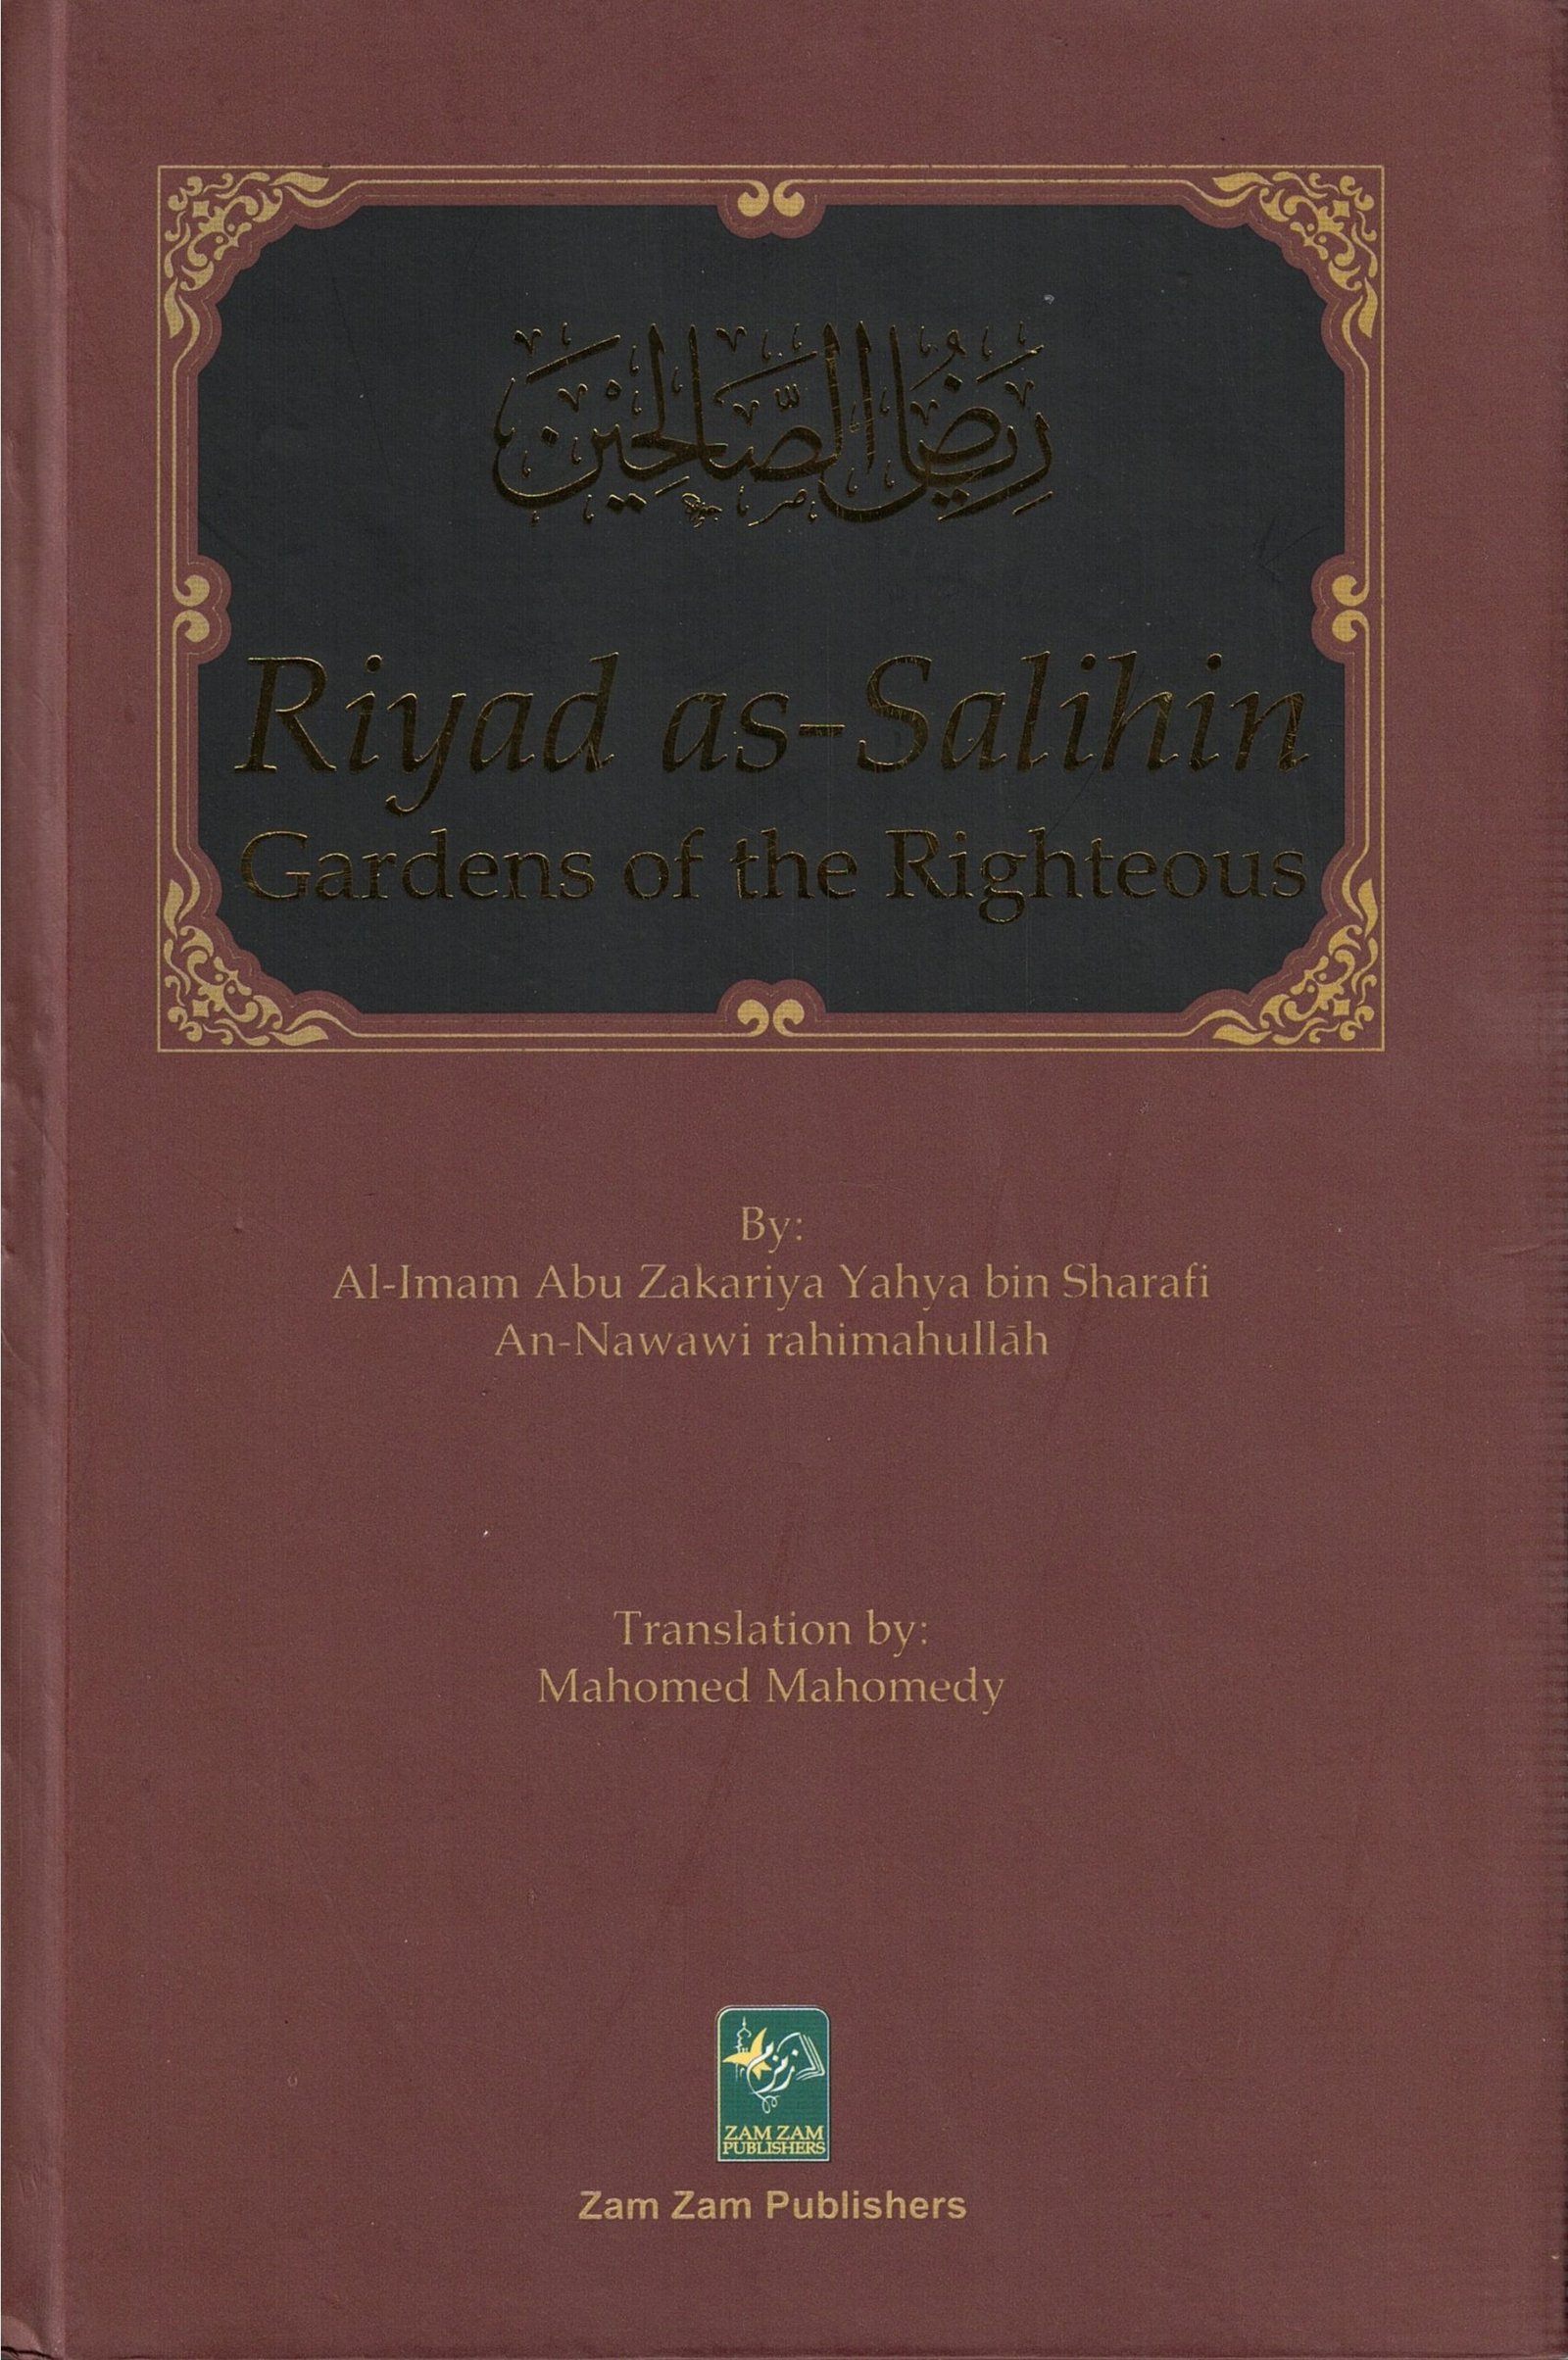 Riyad as-Salihin - Gardens of the Righteous